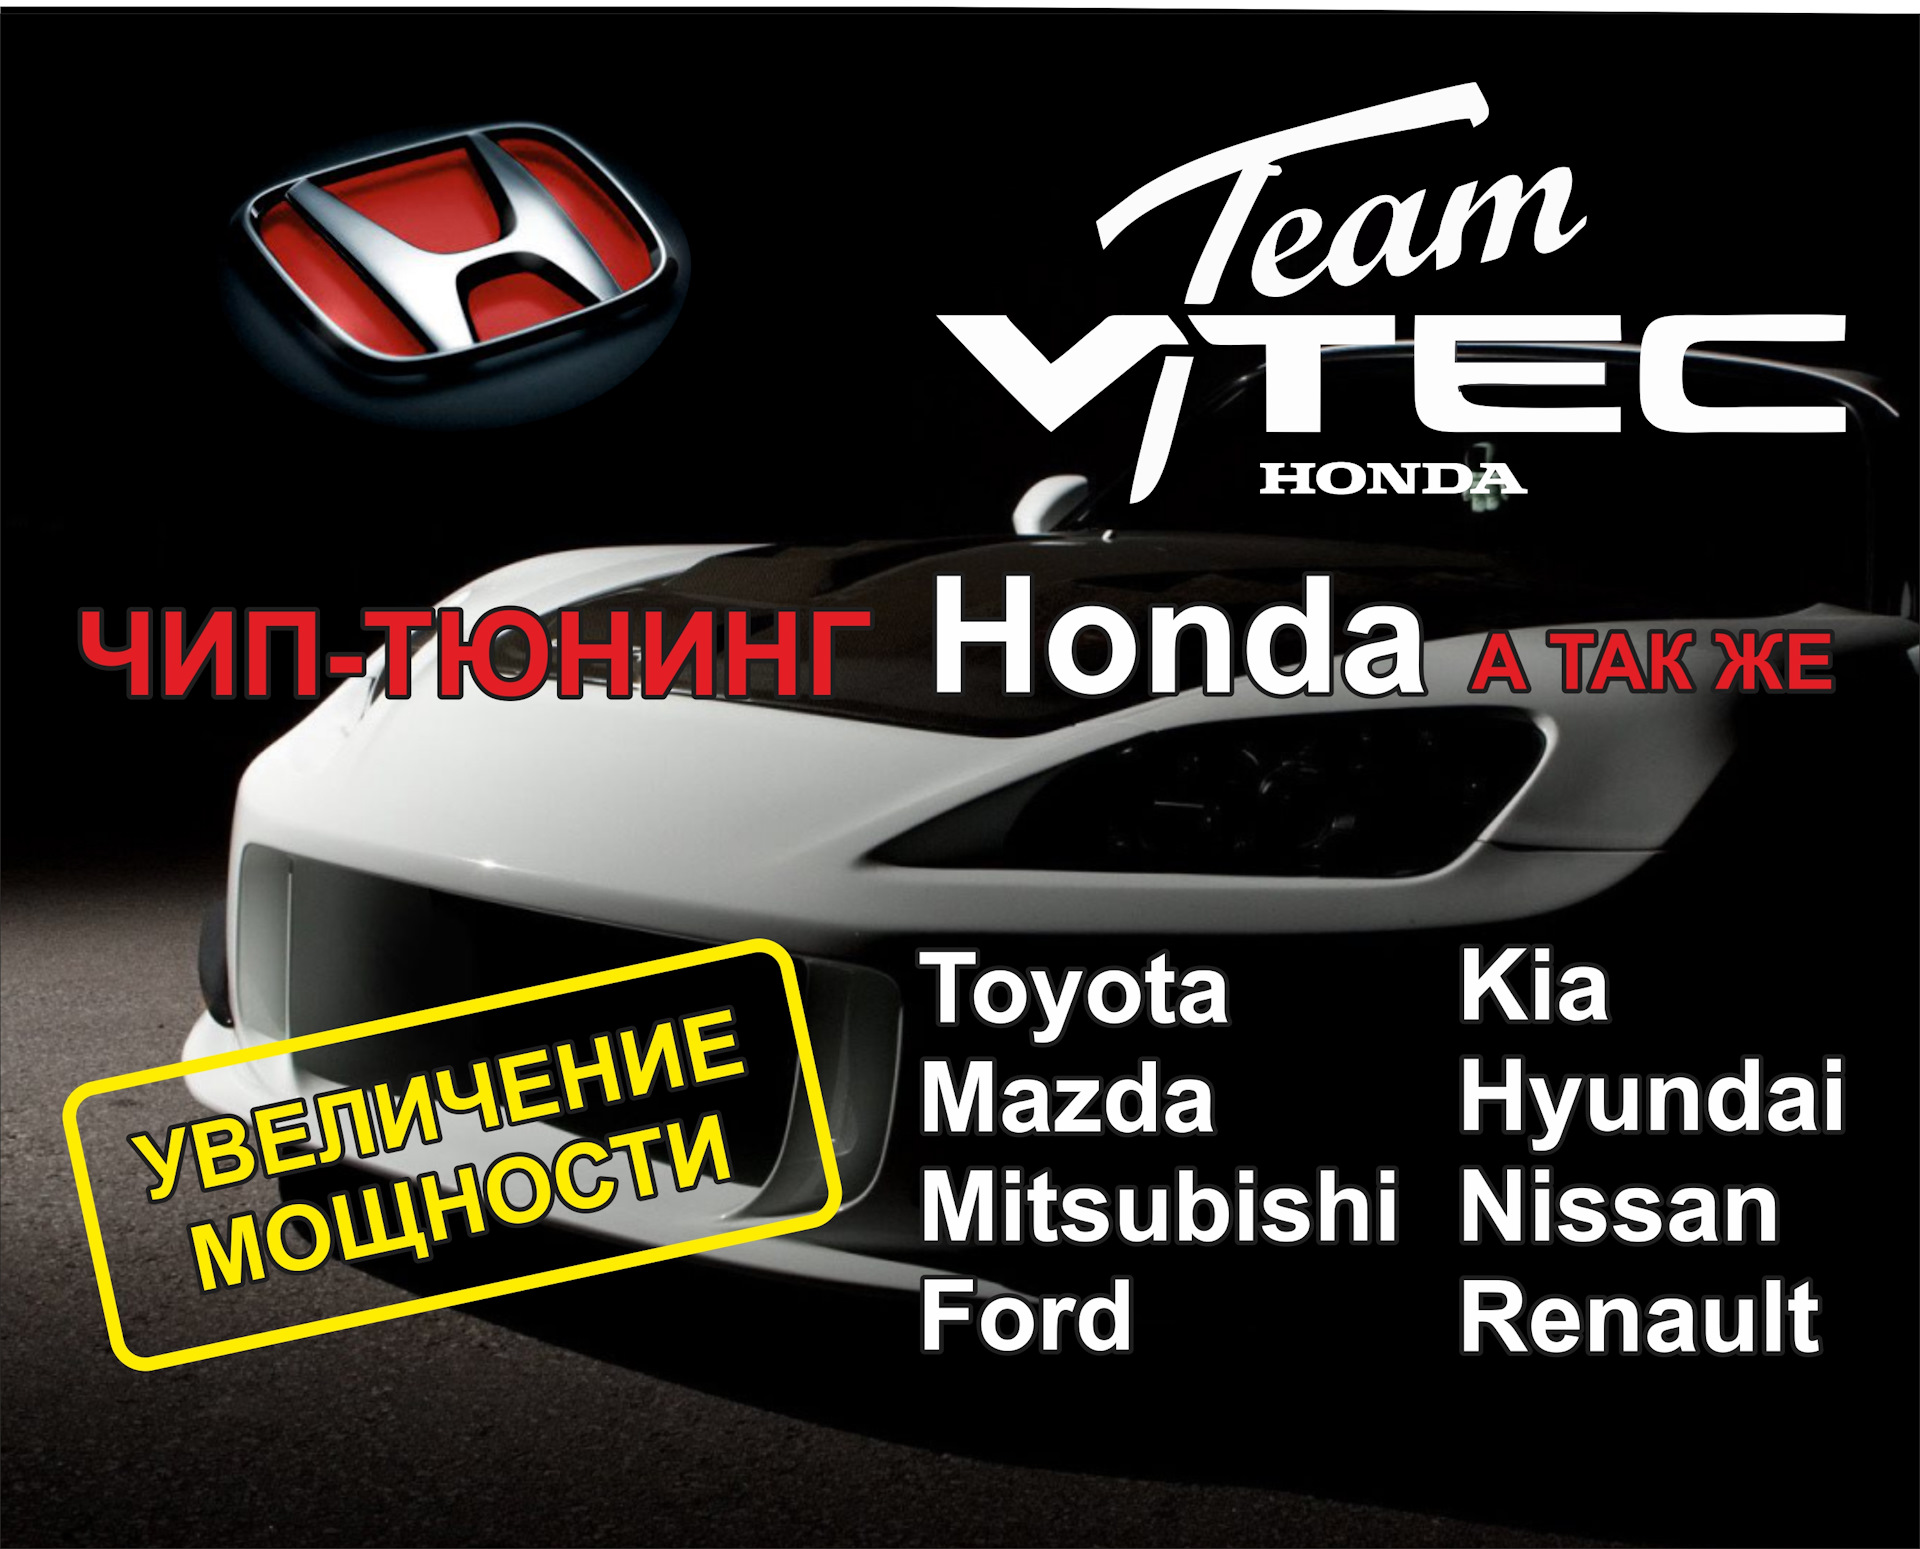 Honda чип. Тойота Хонда и Мазда. Toyota Nissan Honda Mazda. Team VTEC Honda. Чип тюнинг honda